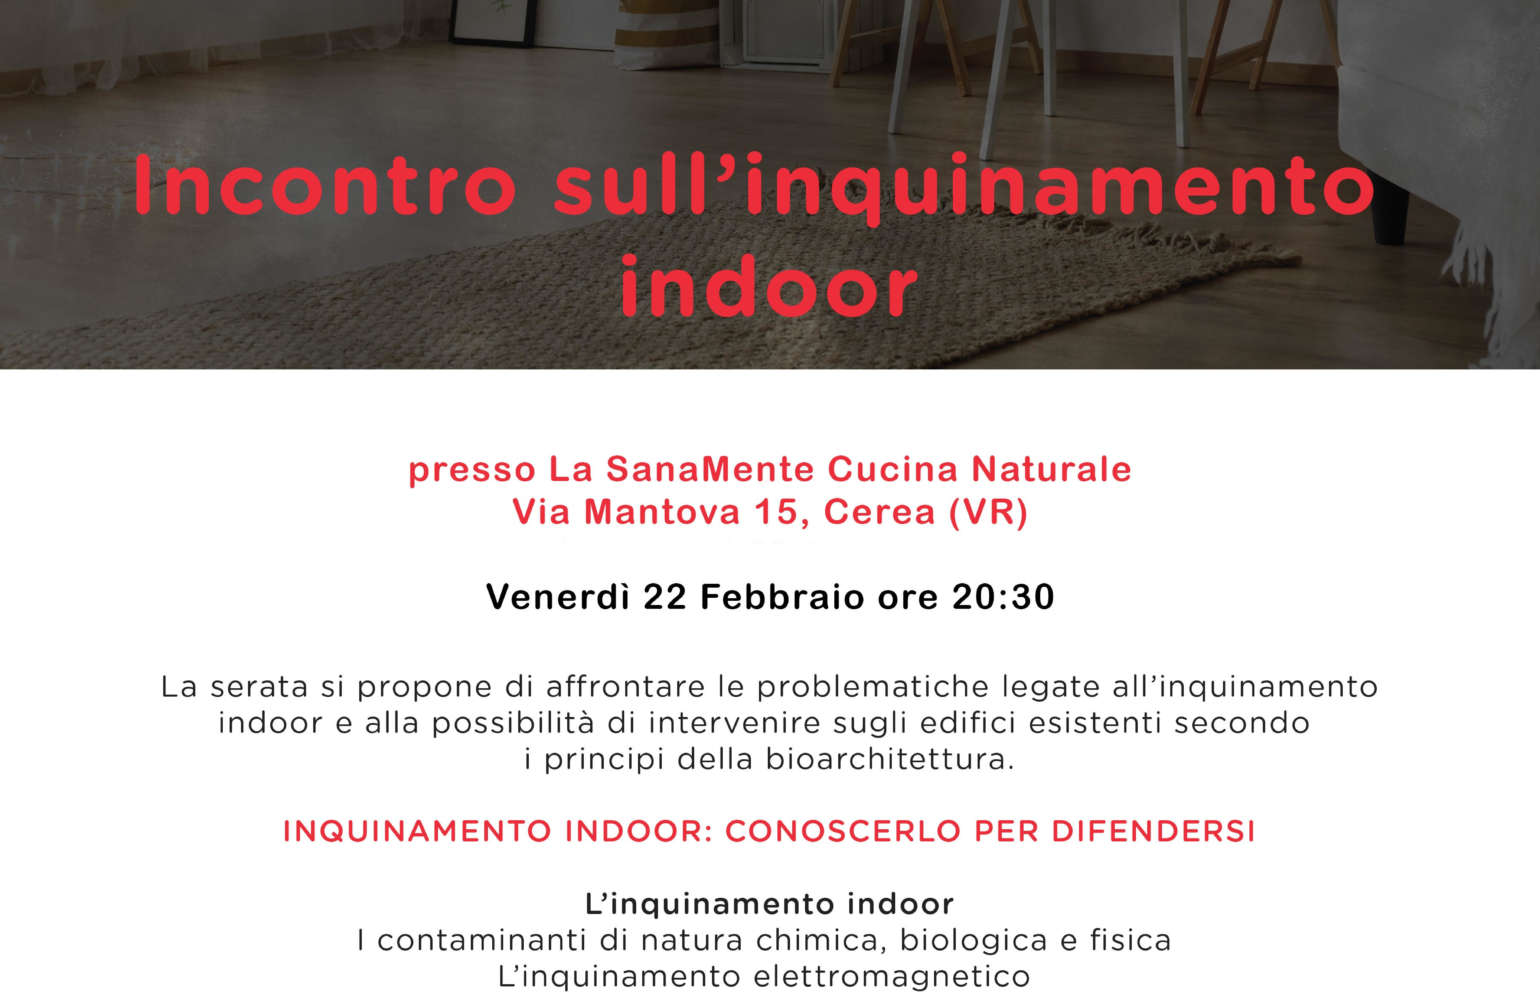 “Incontro sull’inquinamento indoor” venerdì 22 febbraio, via via Mantova 15, Cerea, Verona.